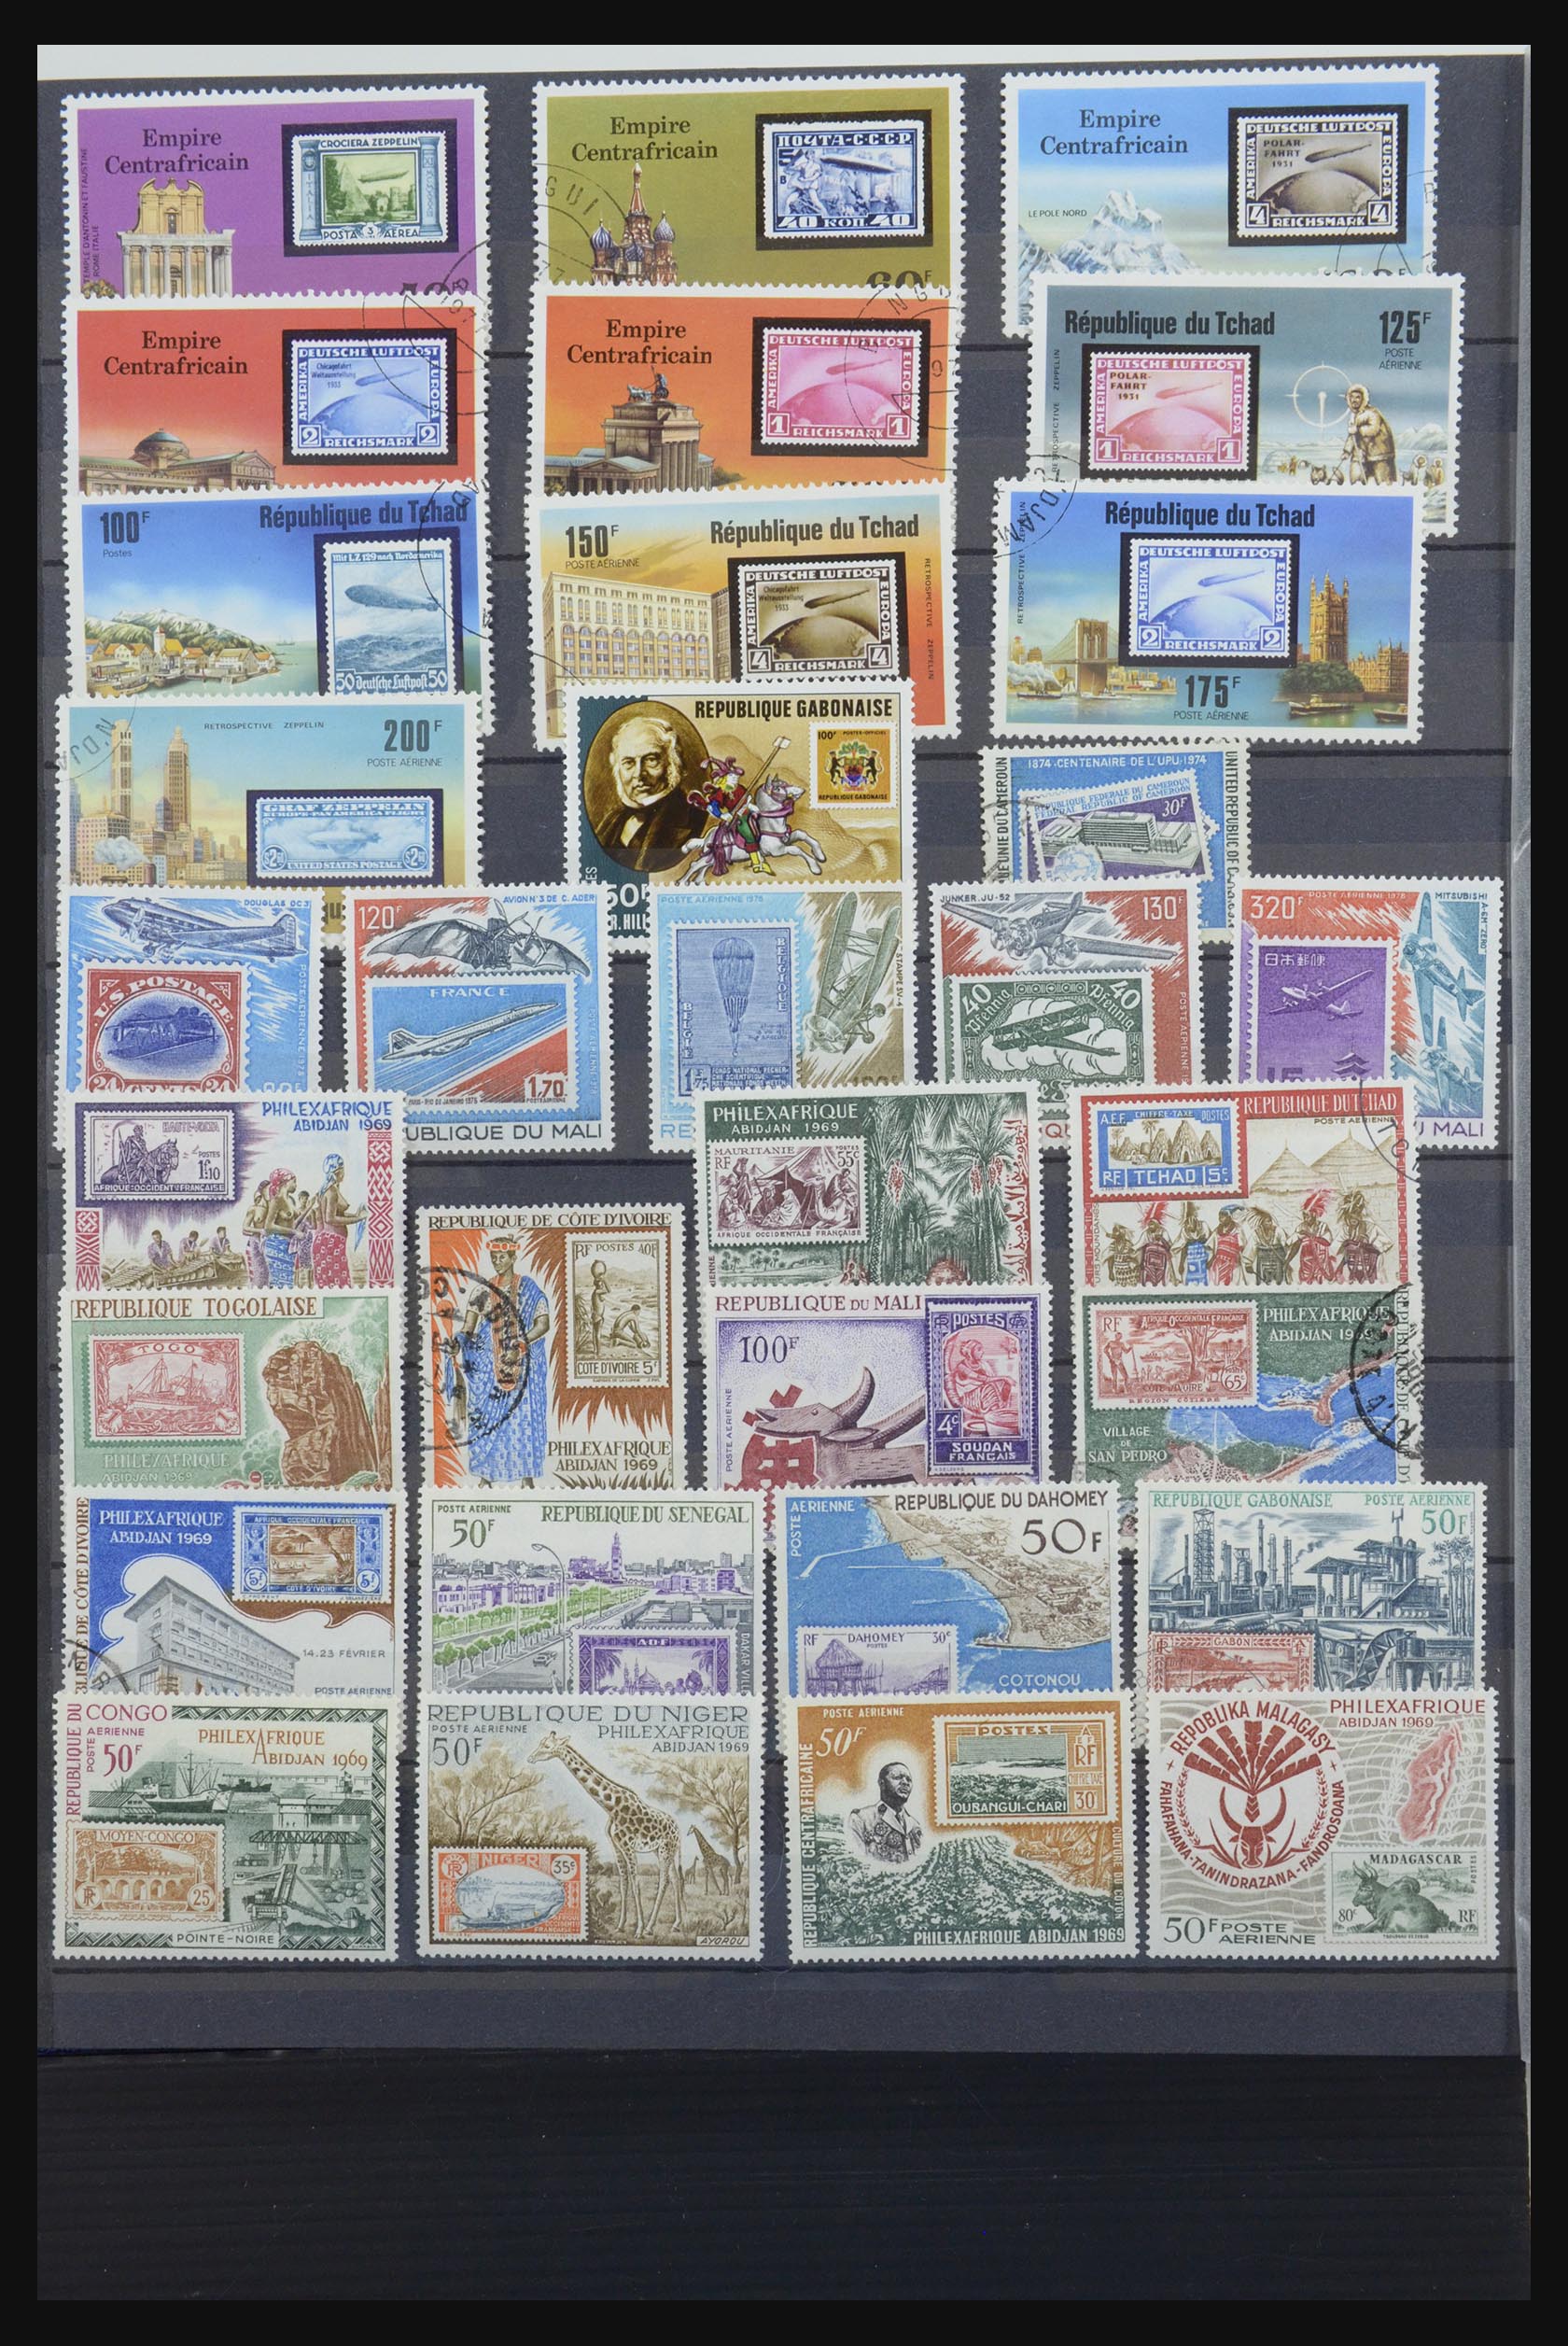 31652 076 - 31652 Motief: postzegel op postzegel 1940-1993.